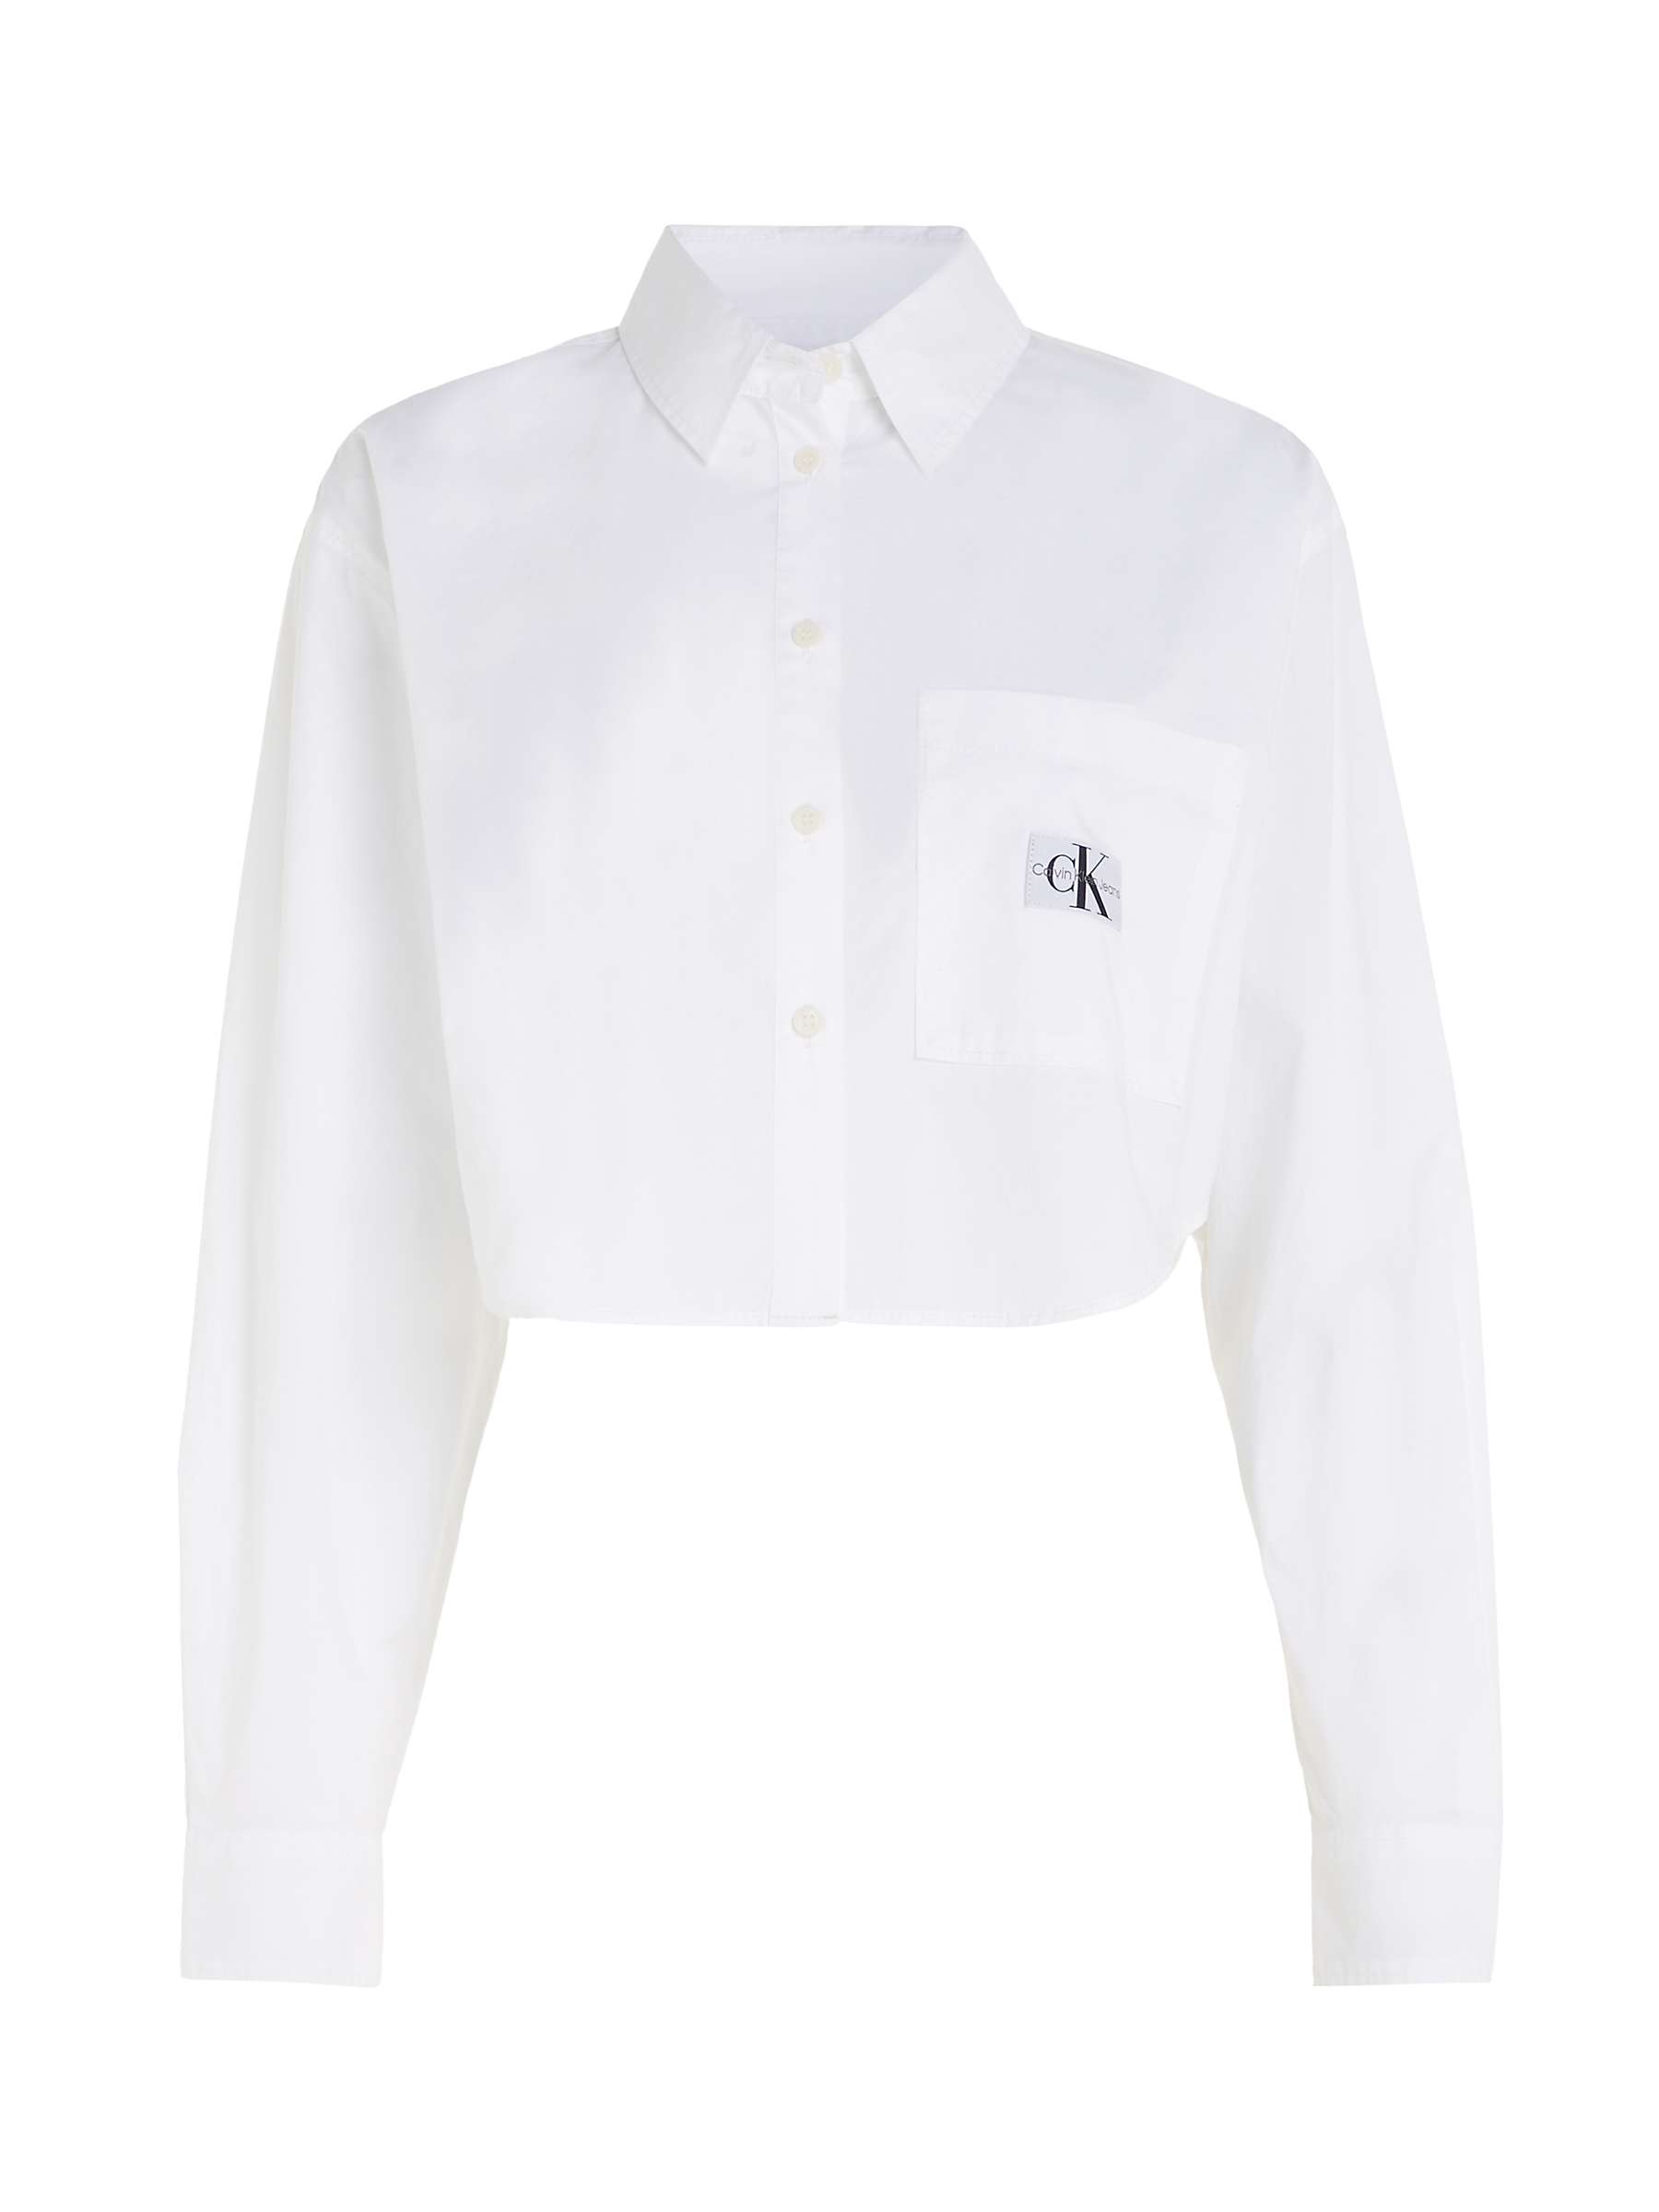 Buy Calvin Klein Woven Label Crop Shirt, Bright White Online at johnlewis.com